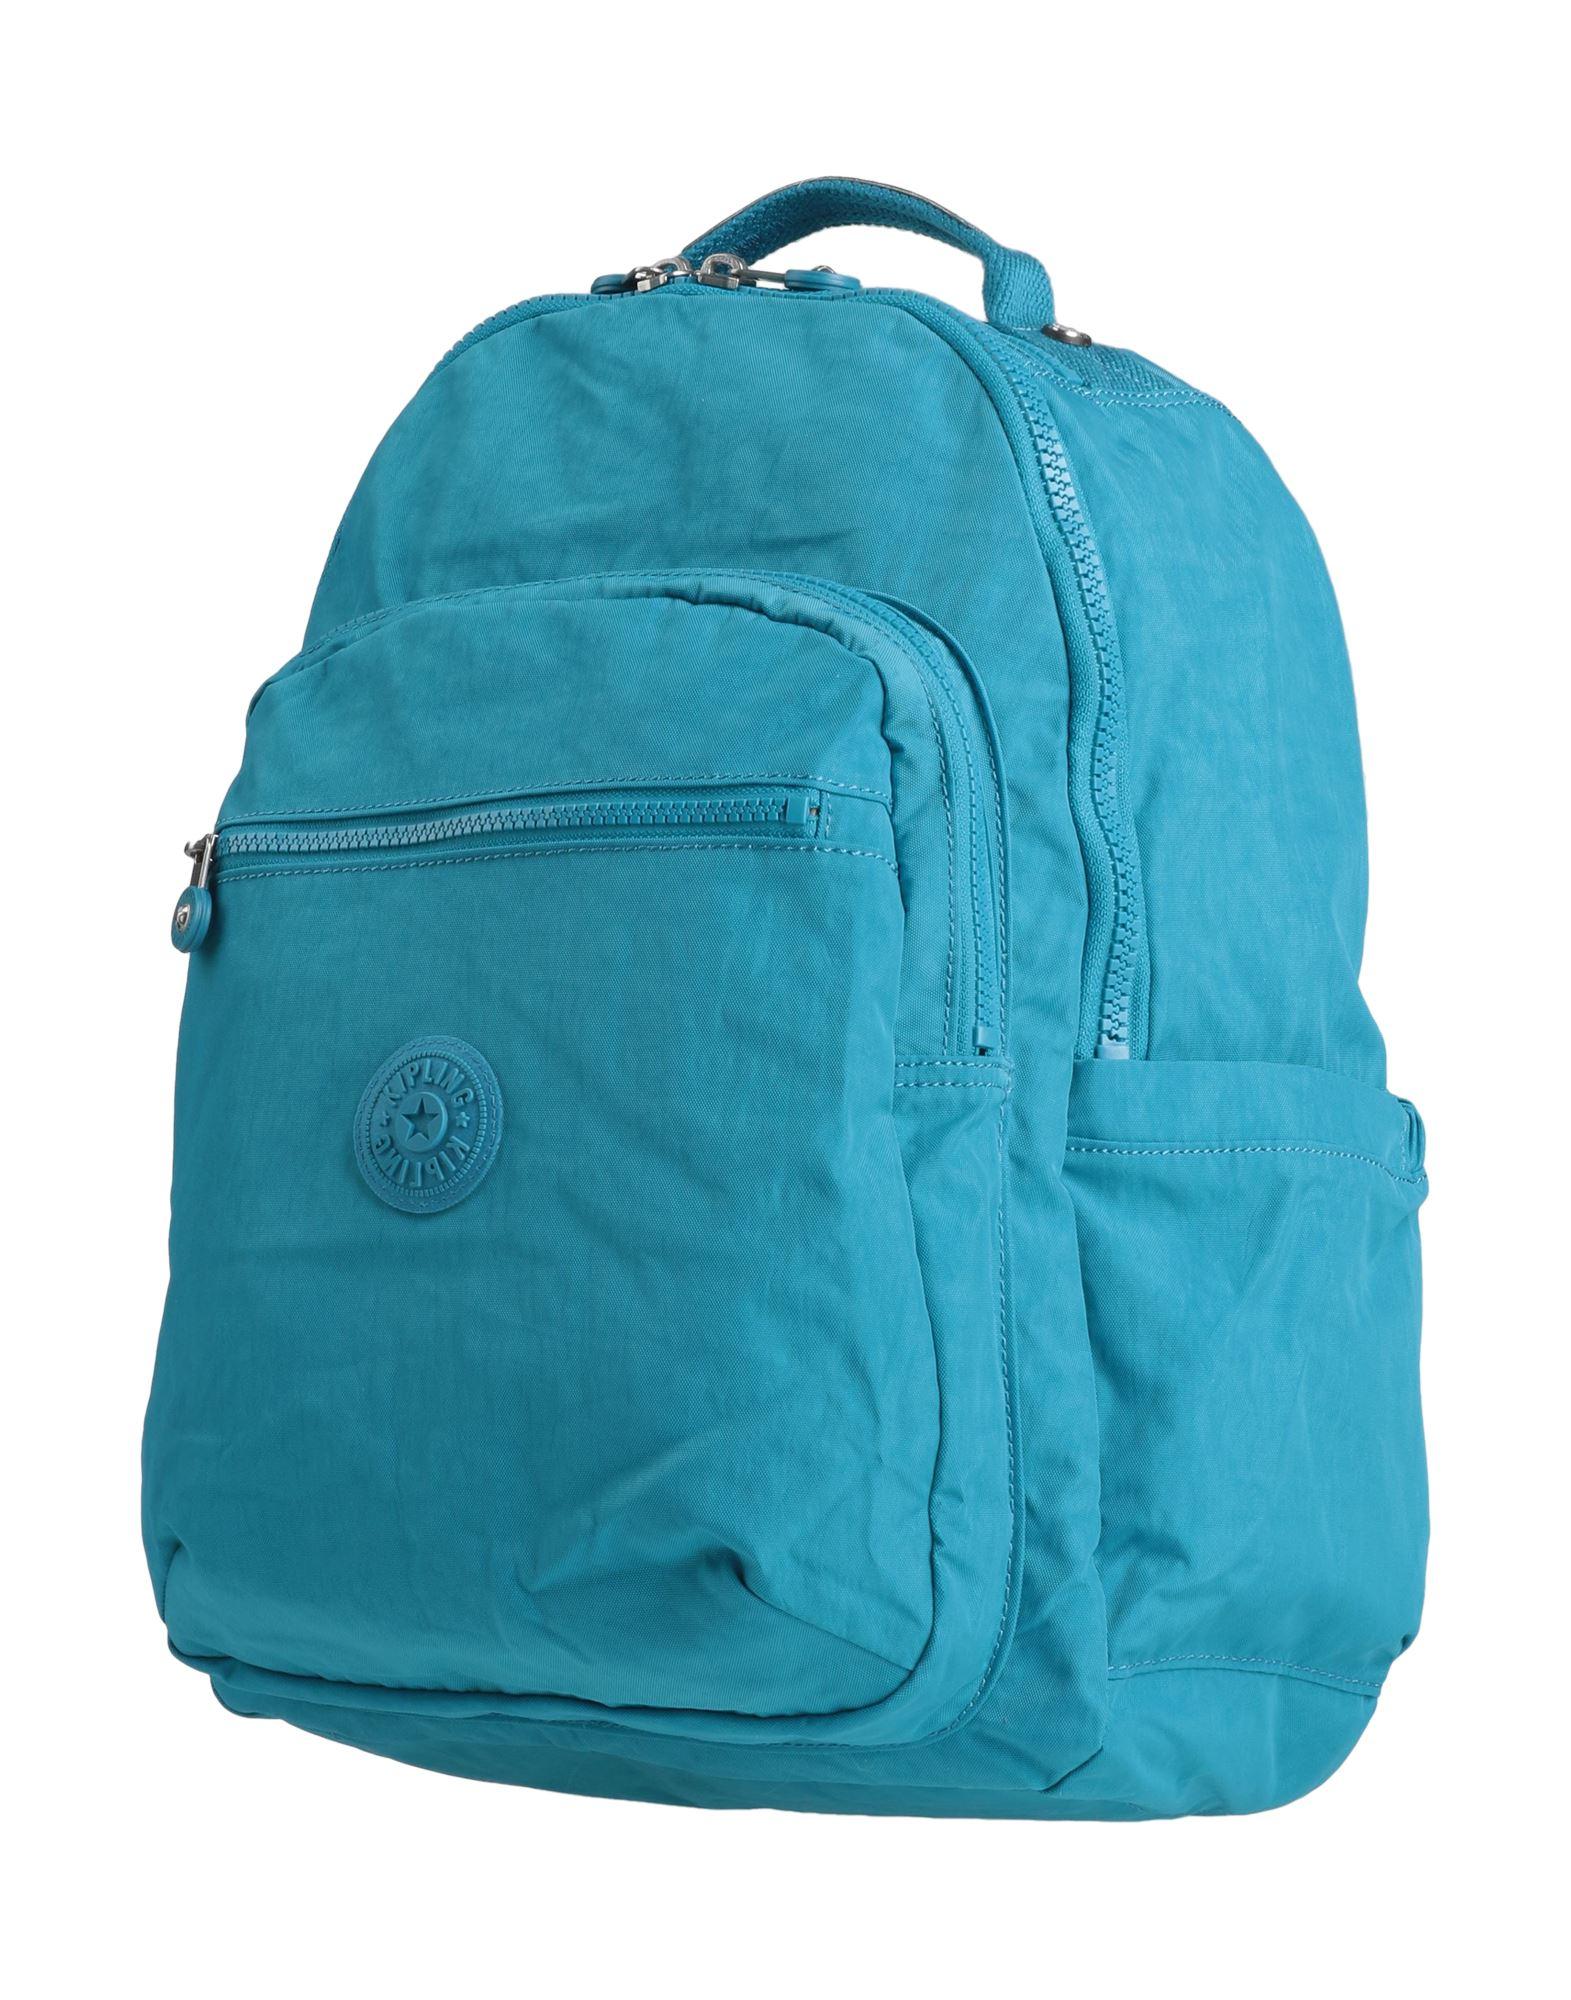 Kipling backpack Blue NWOT iuu.org.tr